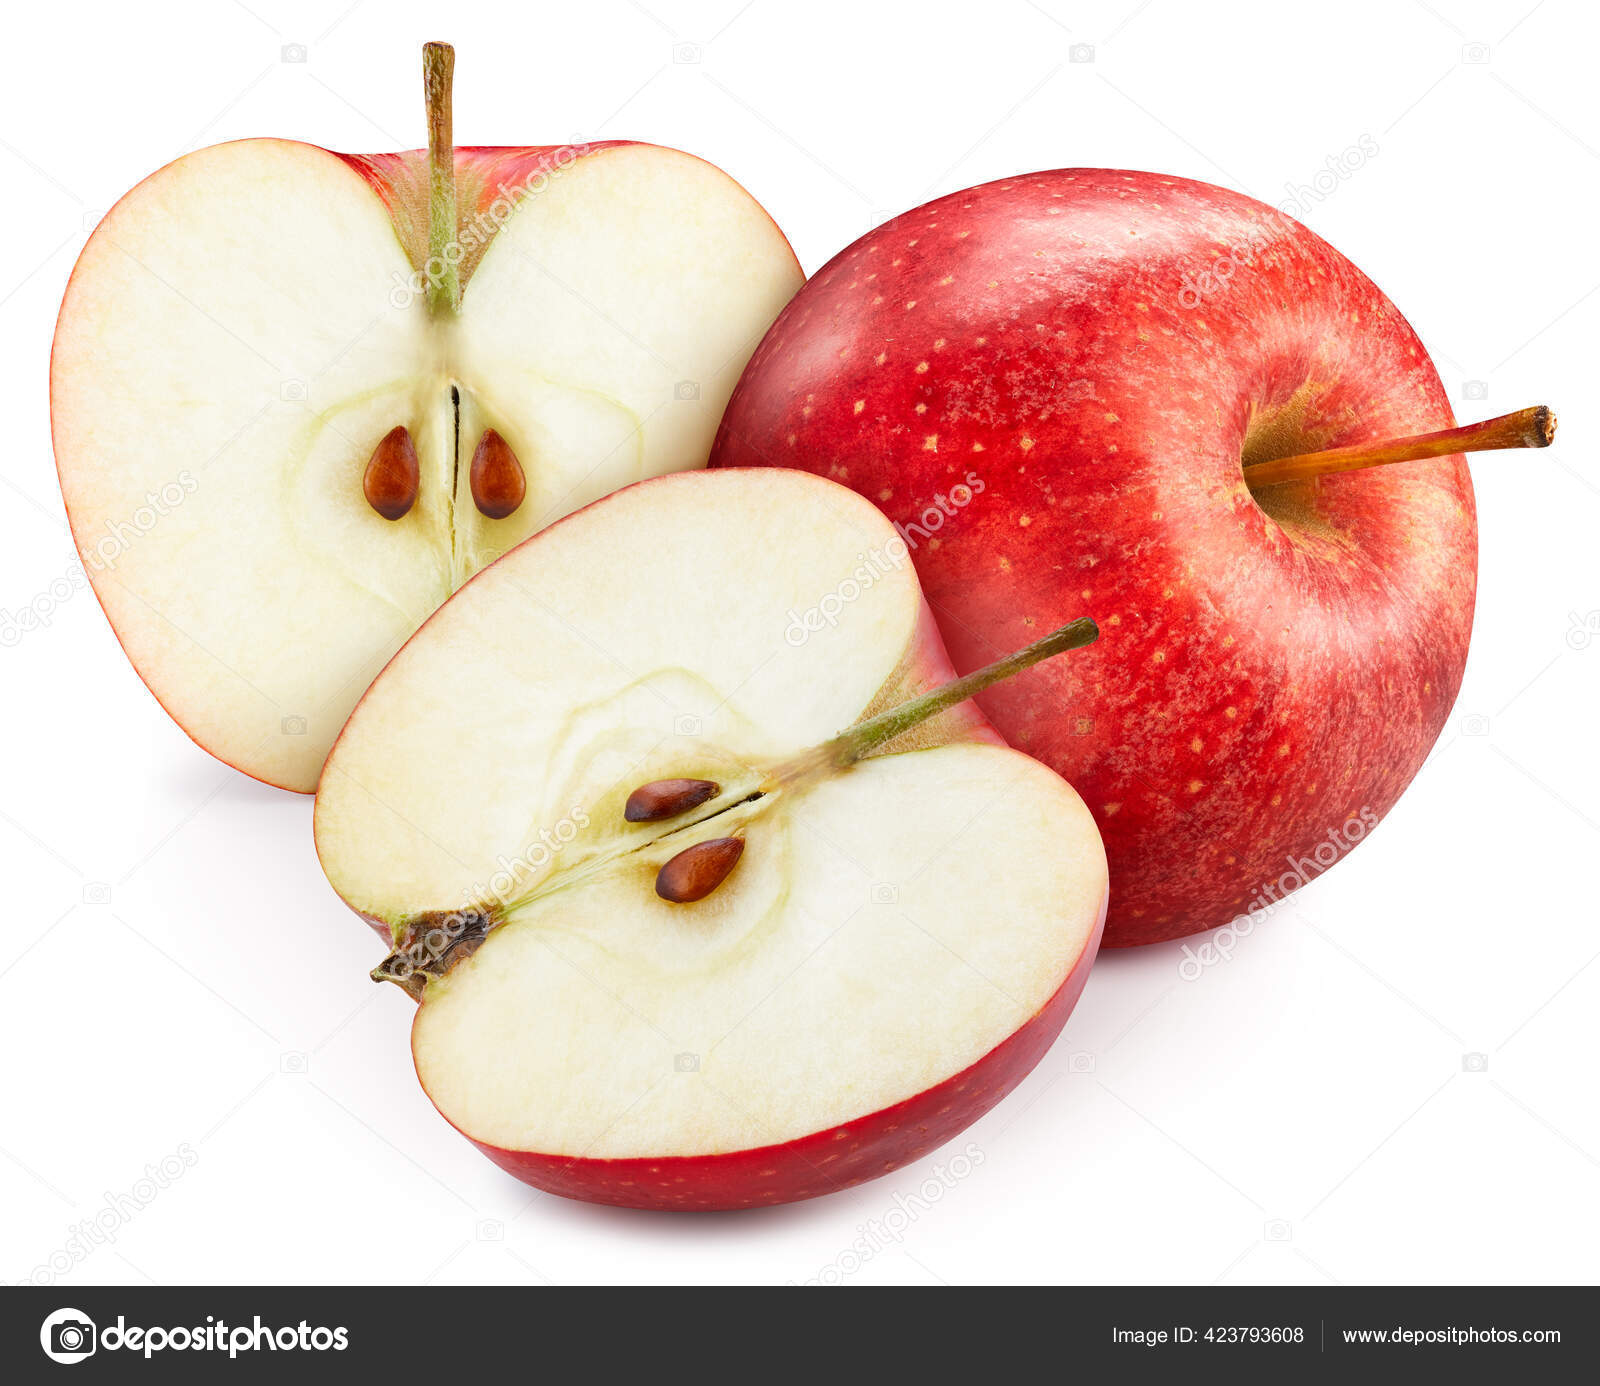 https://st2.depositphotos.com/1642482/42379/i/1600/depositphotos_423793608-stock-photo-apple-whole-fruit-half-slice.jpg